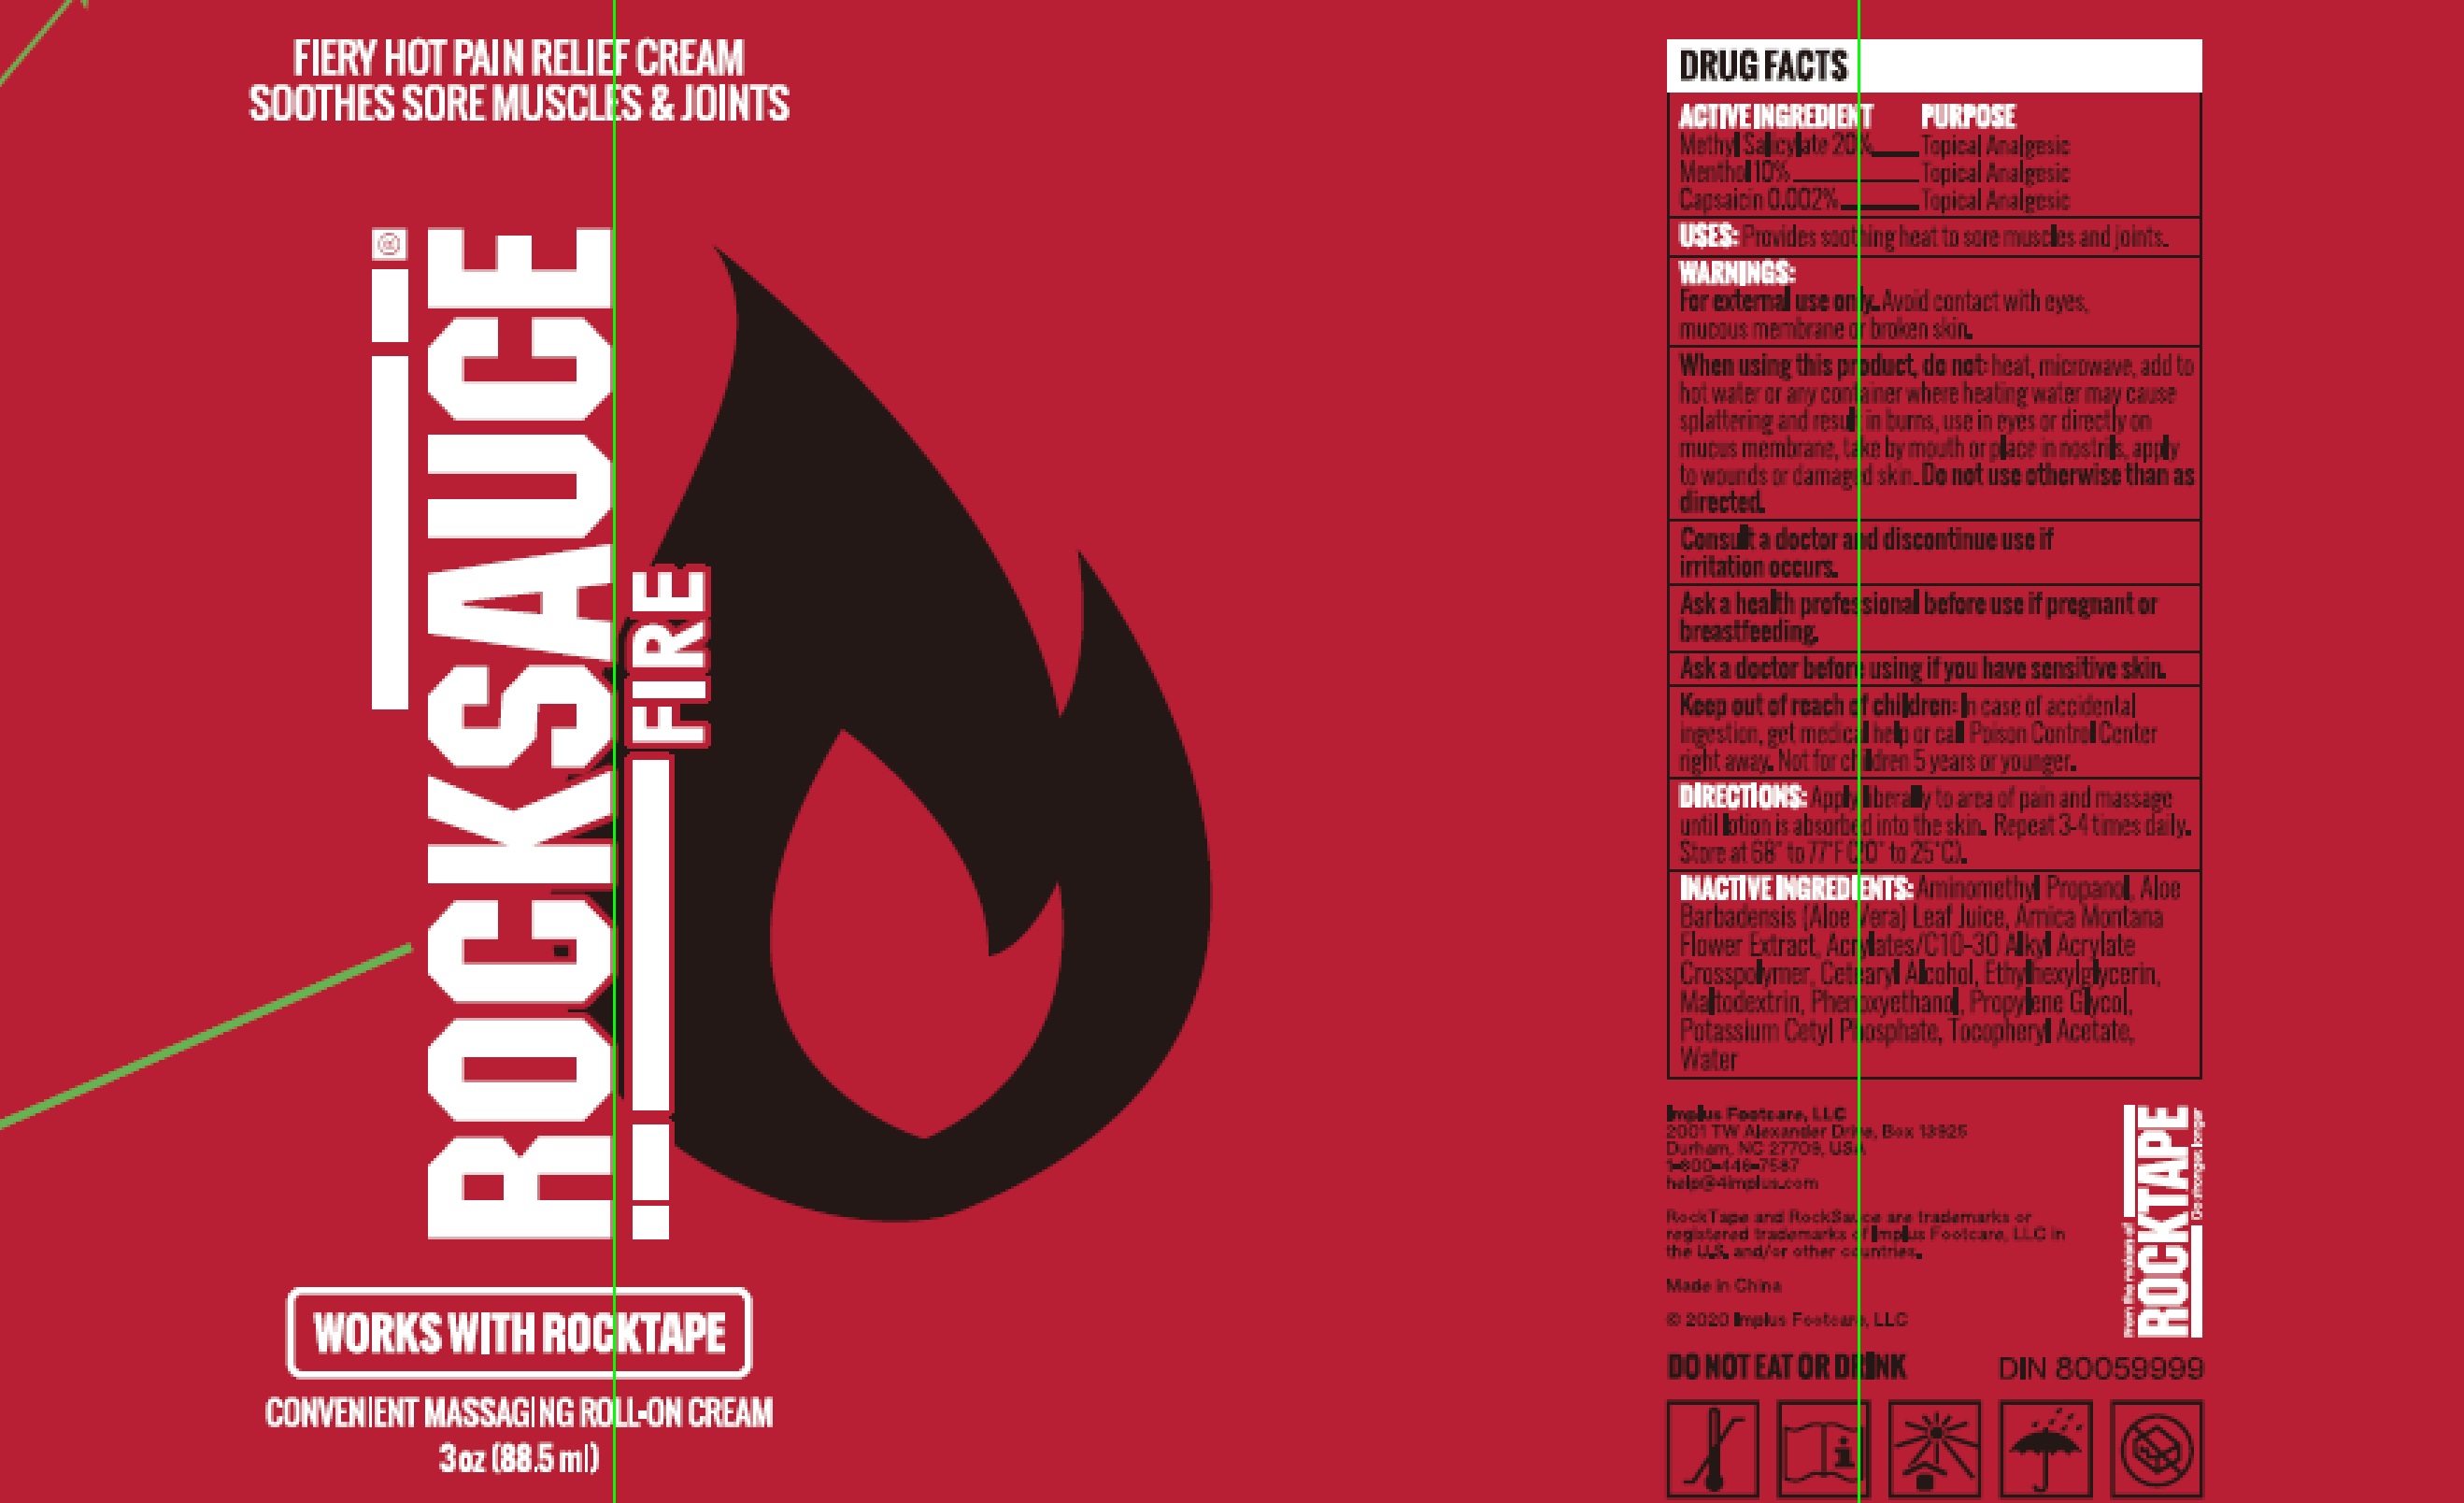 RockSauce Fire Relief Cream